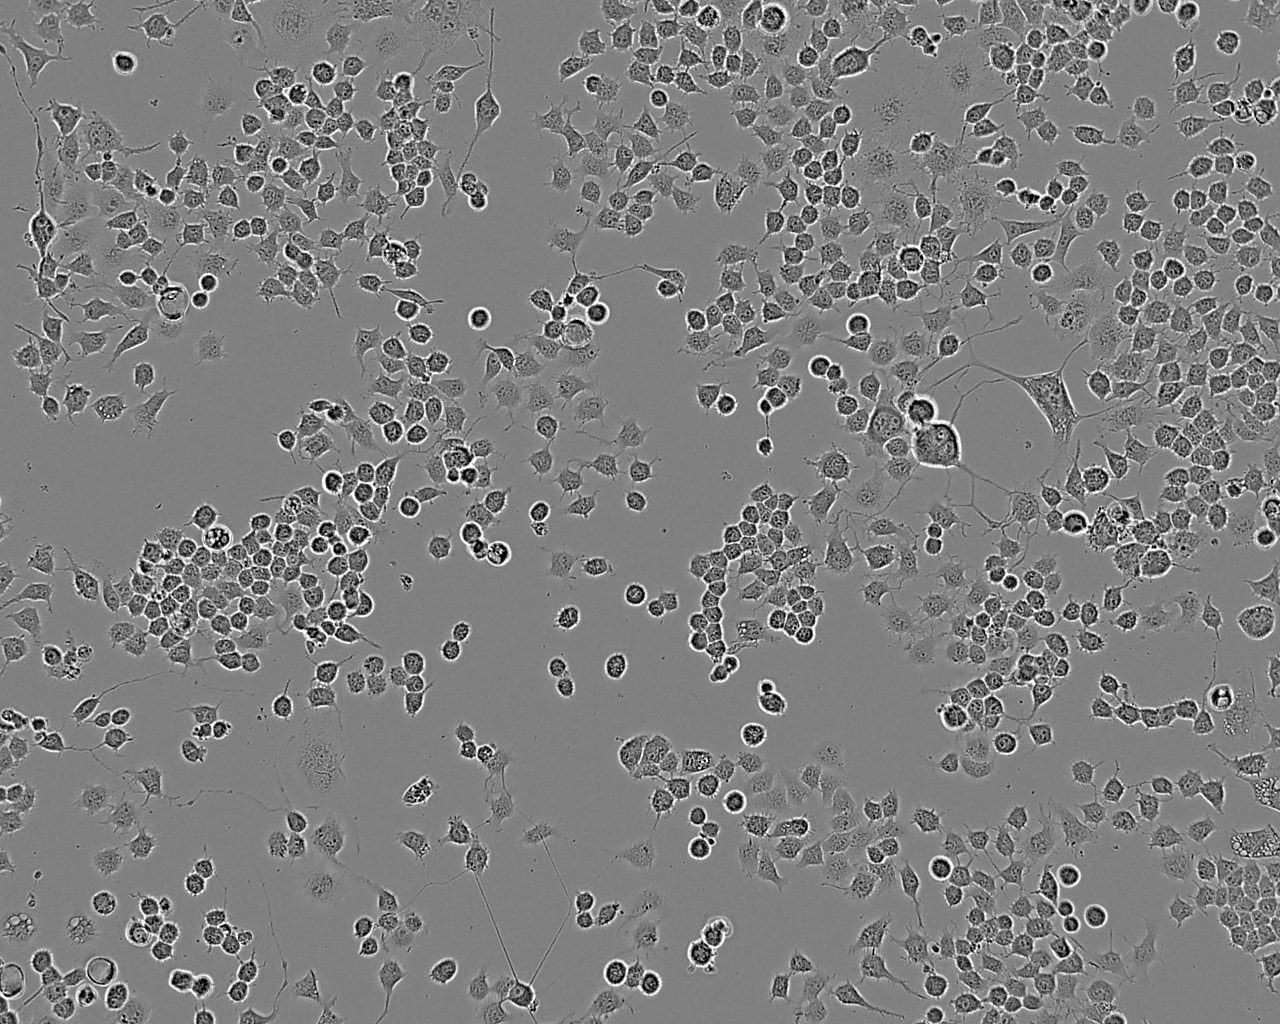 PC-3M epithelioid cells人前列腺癌细胞系,PC-3M epithelioid cells